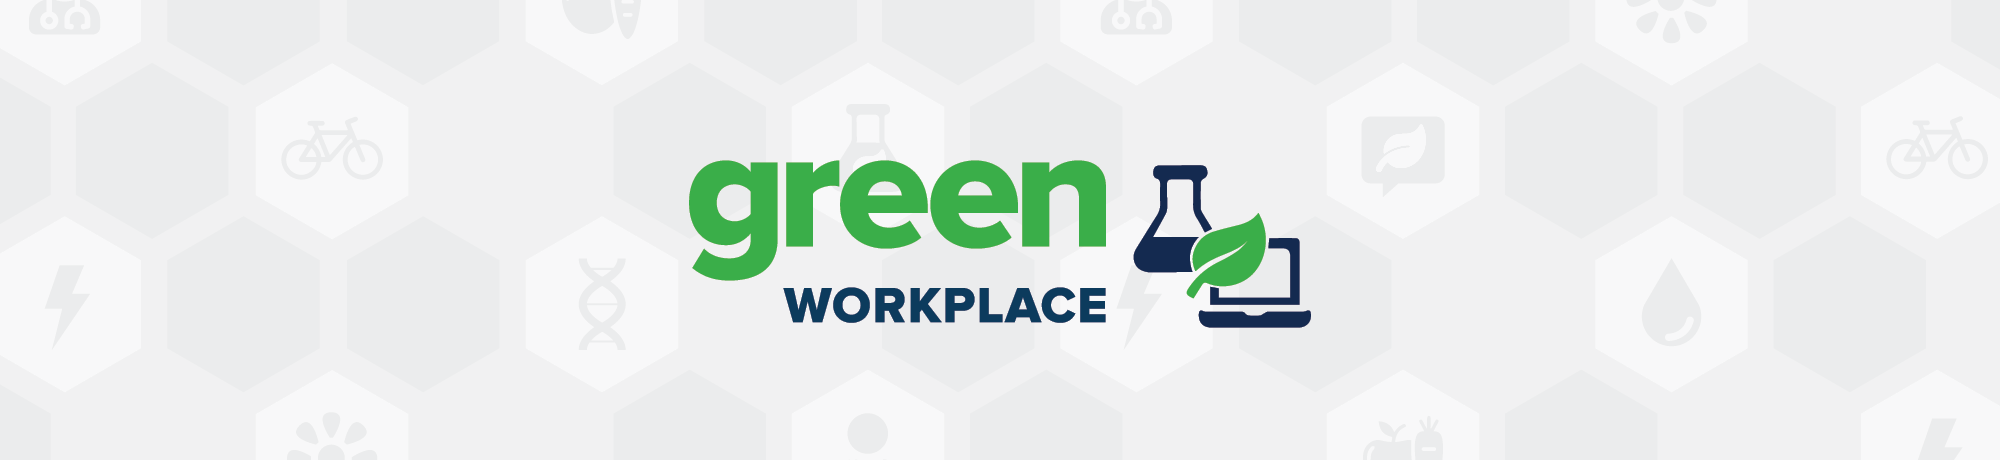 green workplace logo